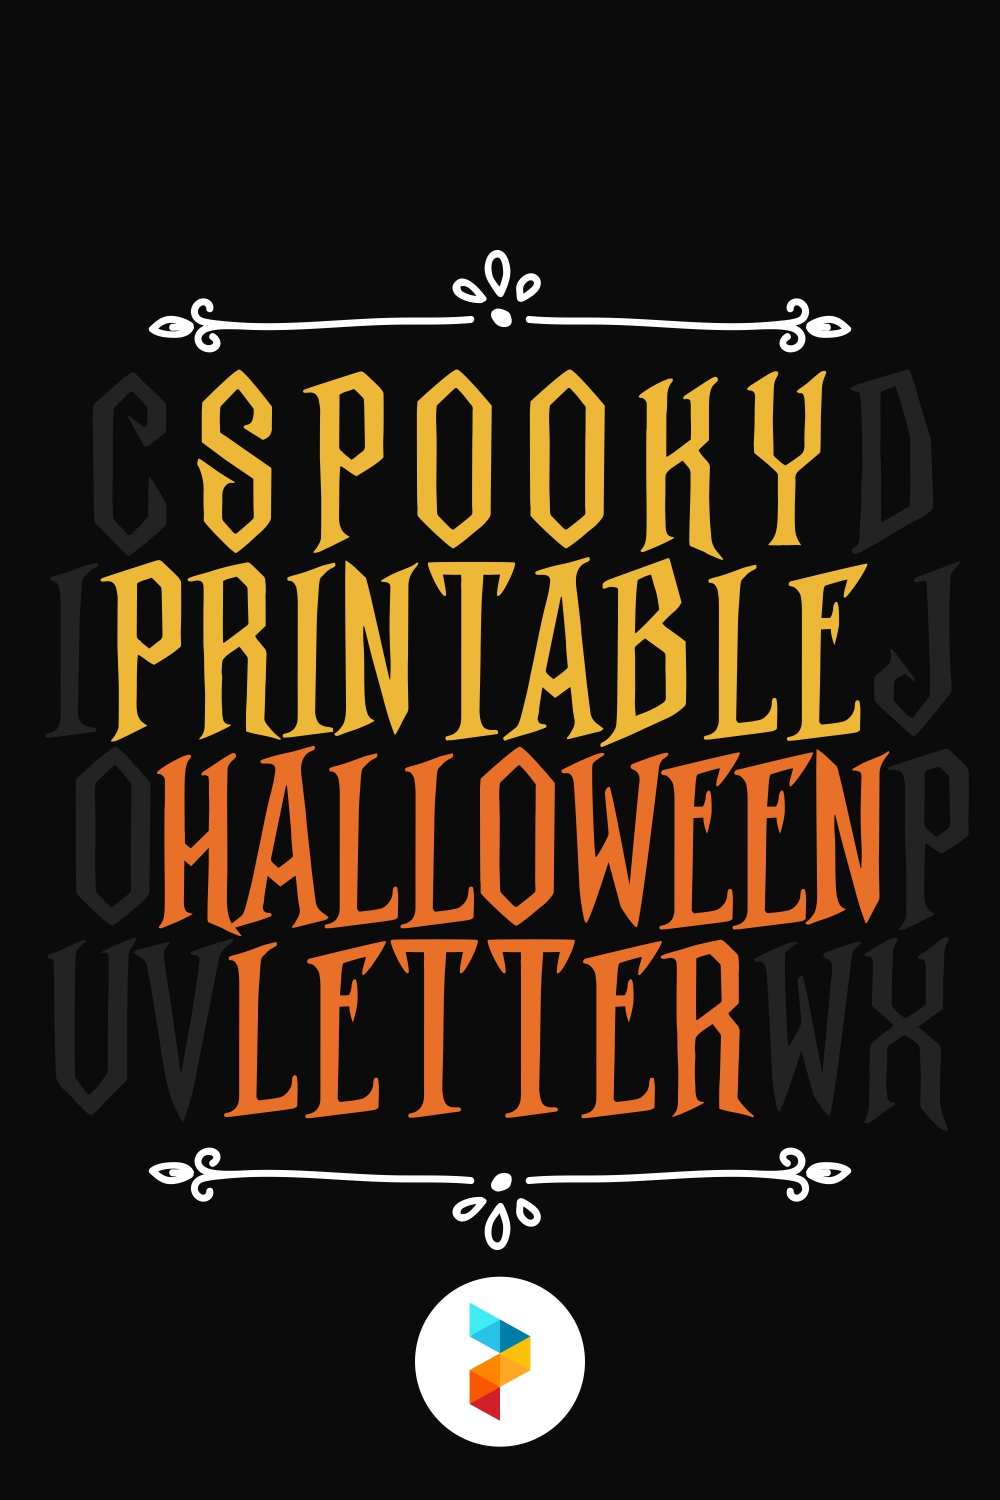 15 Best Spooky Printable Halloween Letters